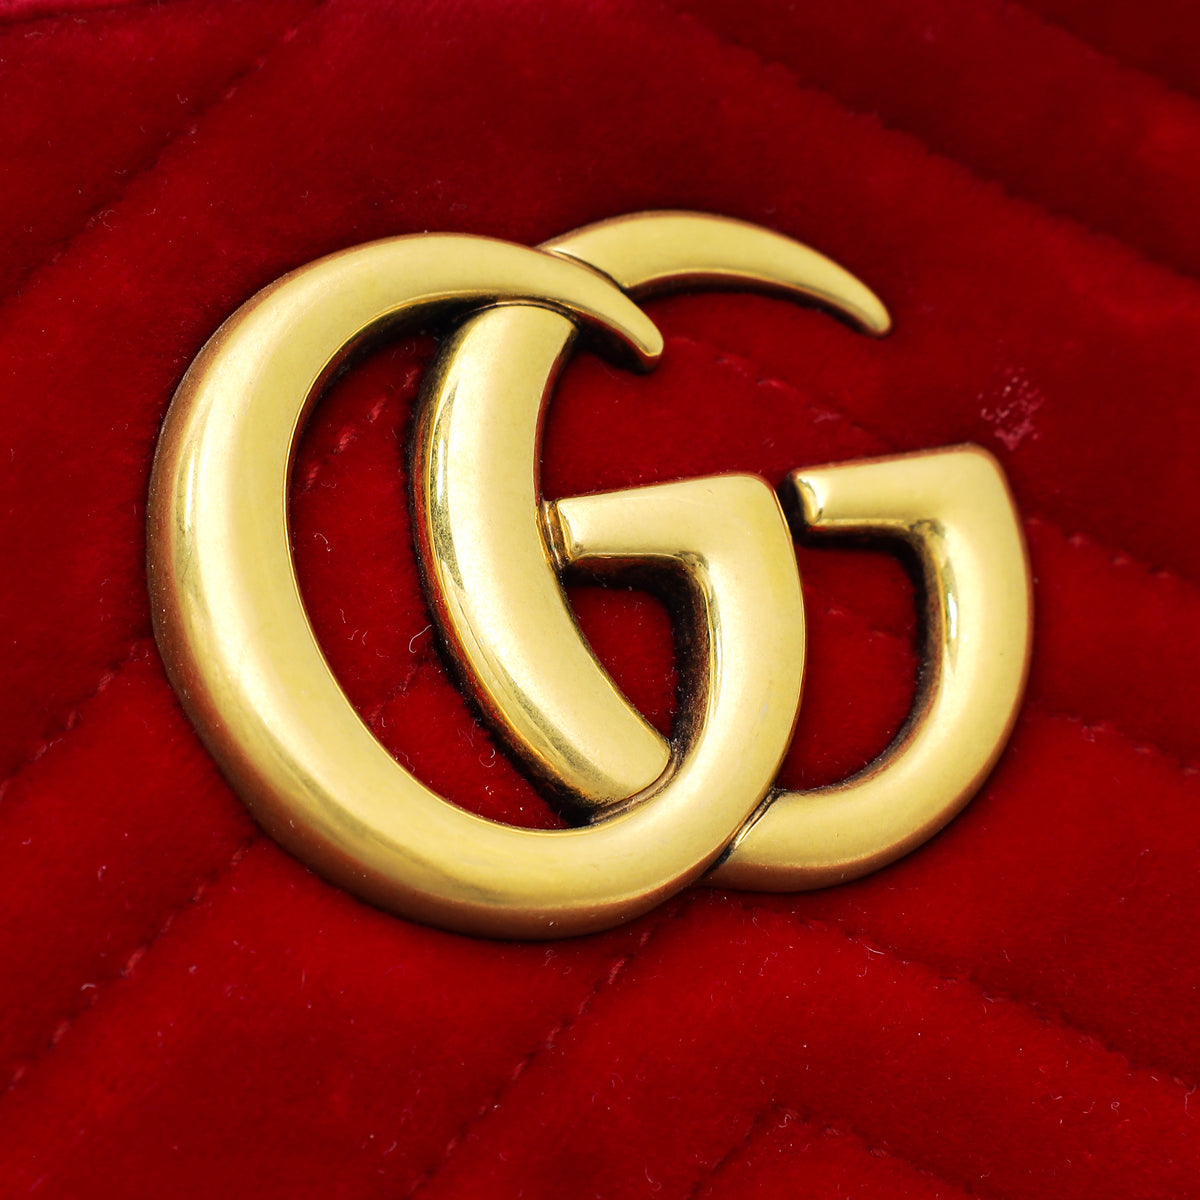 Gucci Red Velvet GG Marmont Small Camera Shoulder Bag